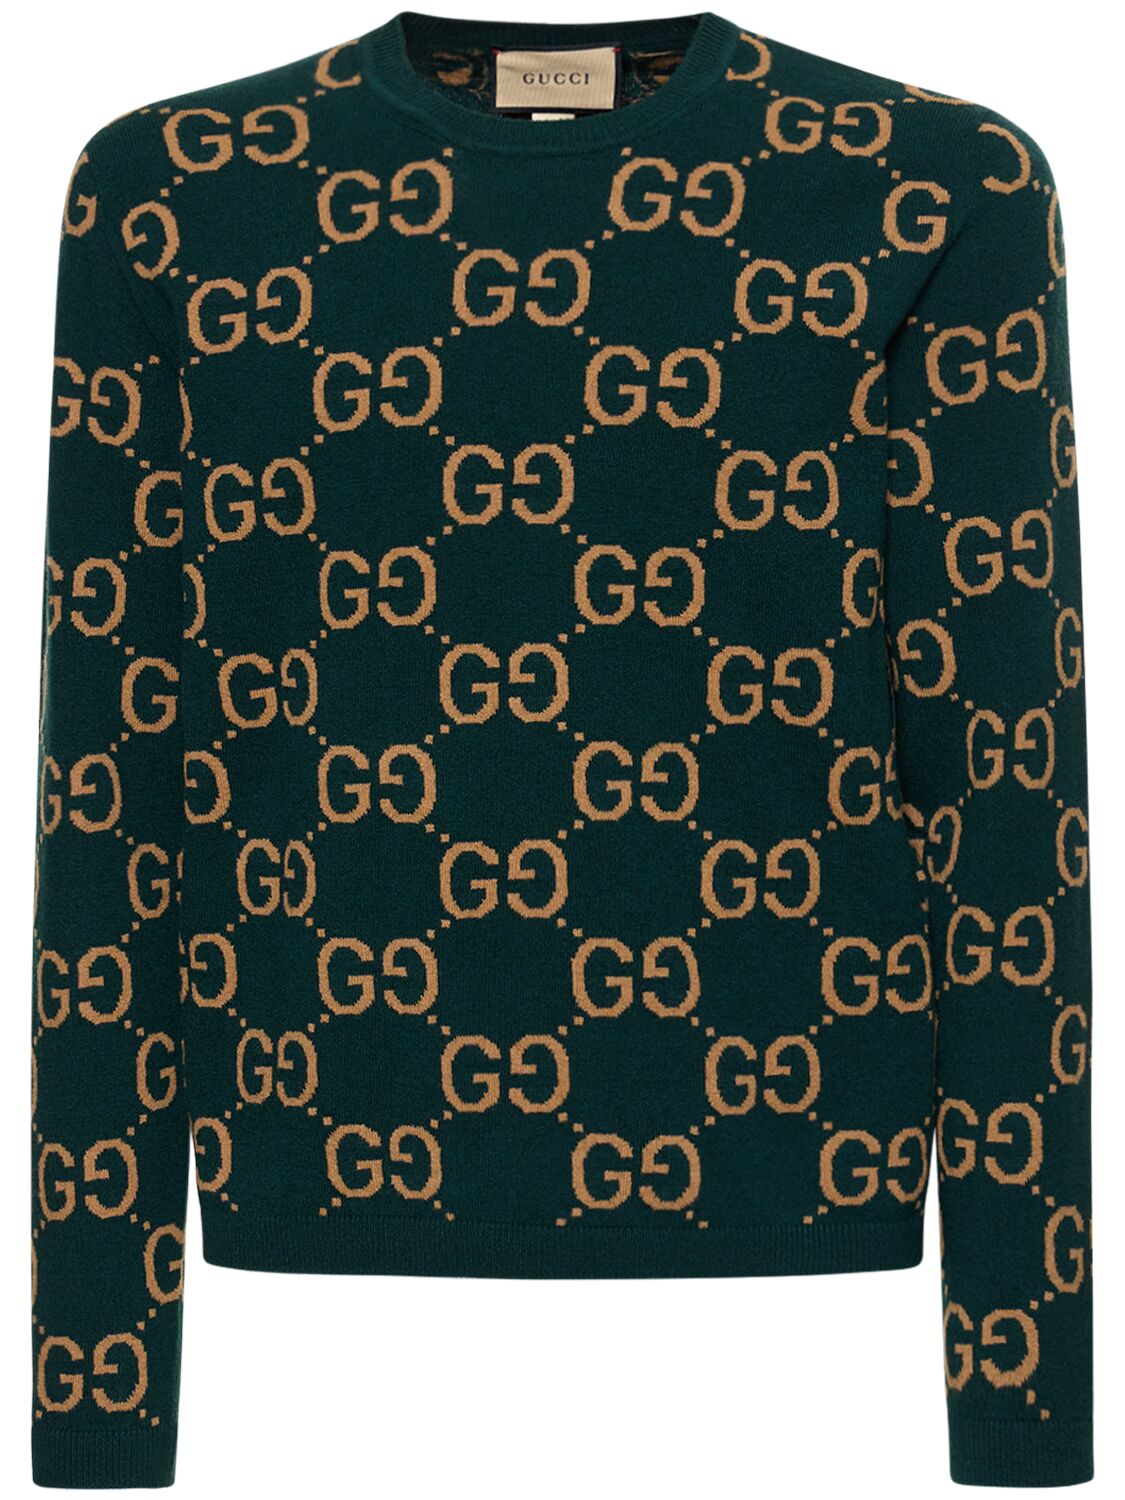 Image of Gg Wool Knit Crewneck Sweater